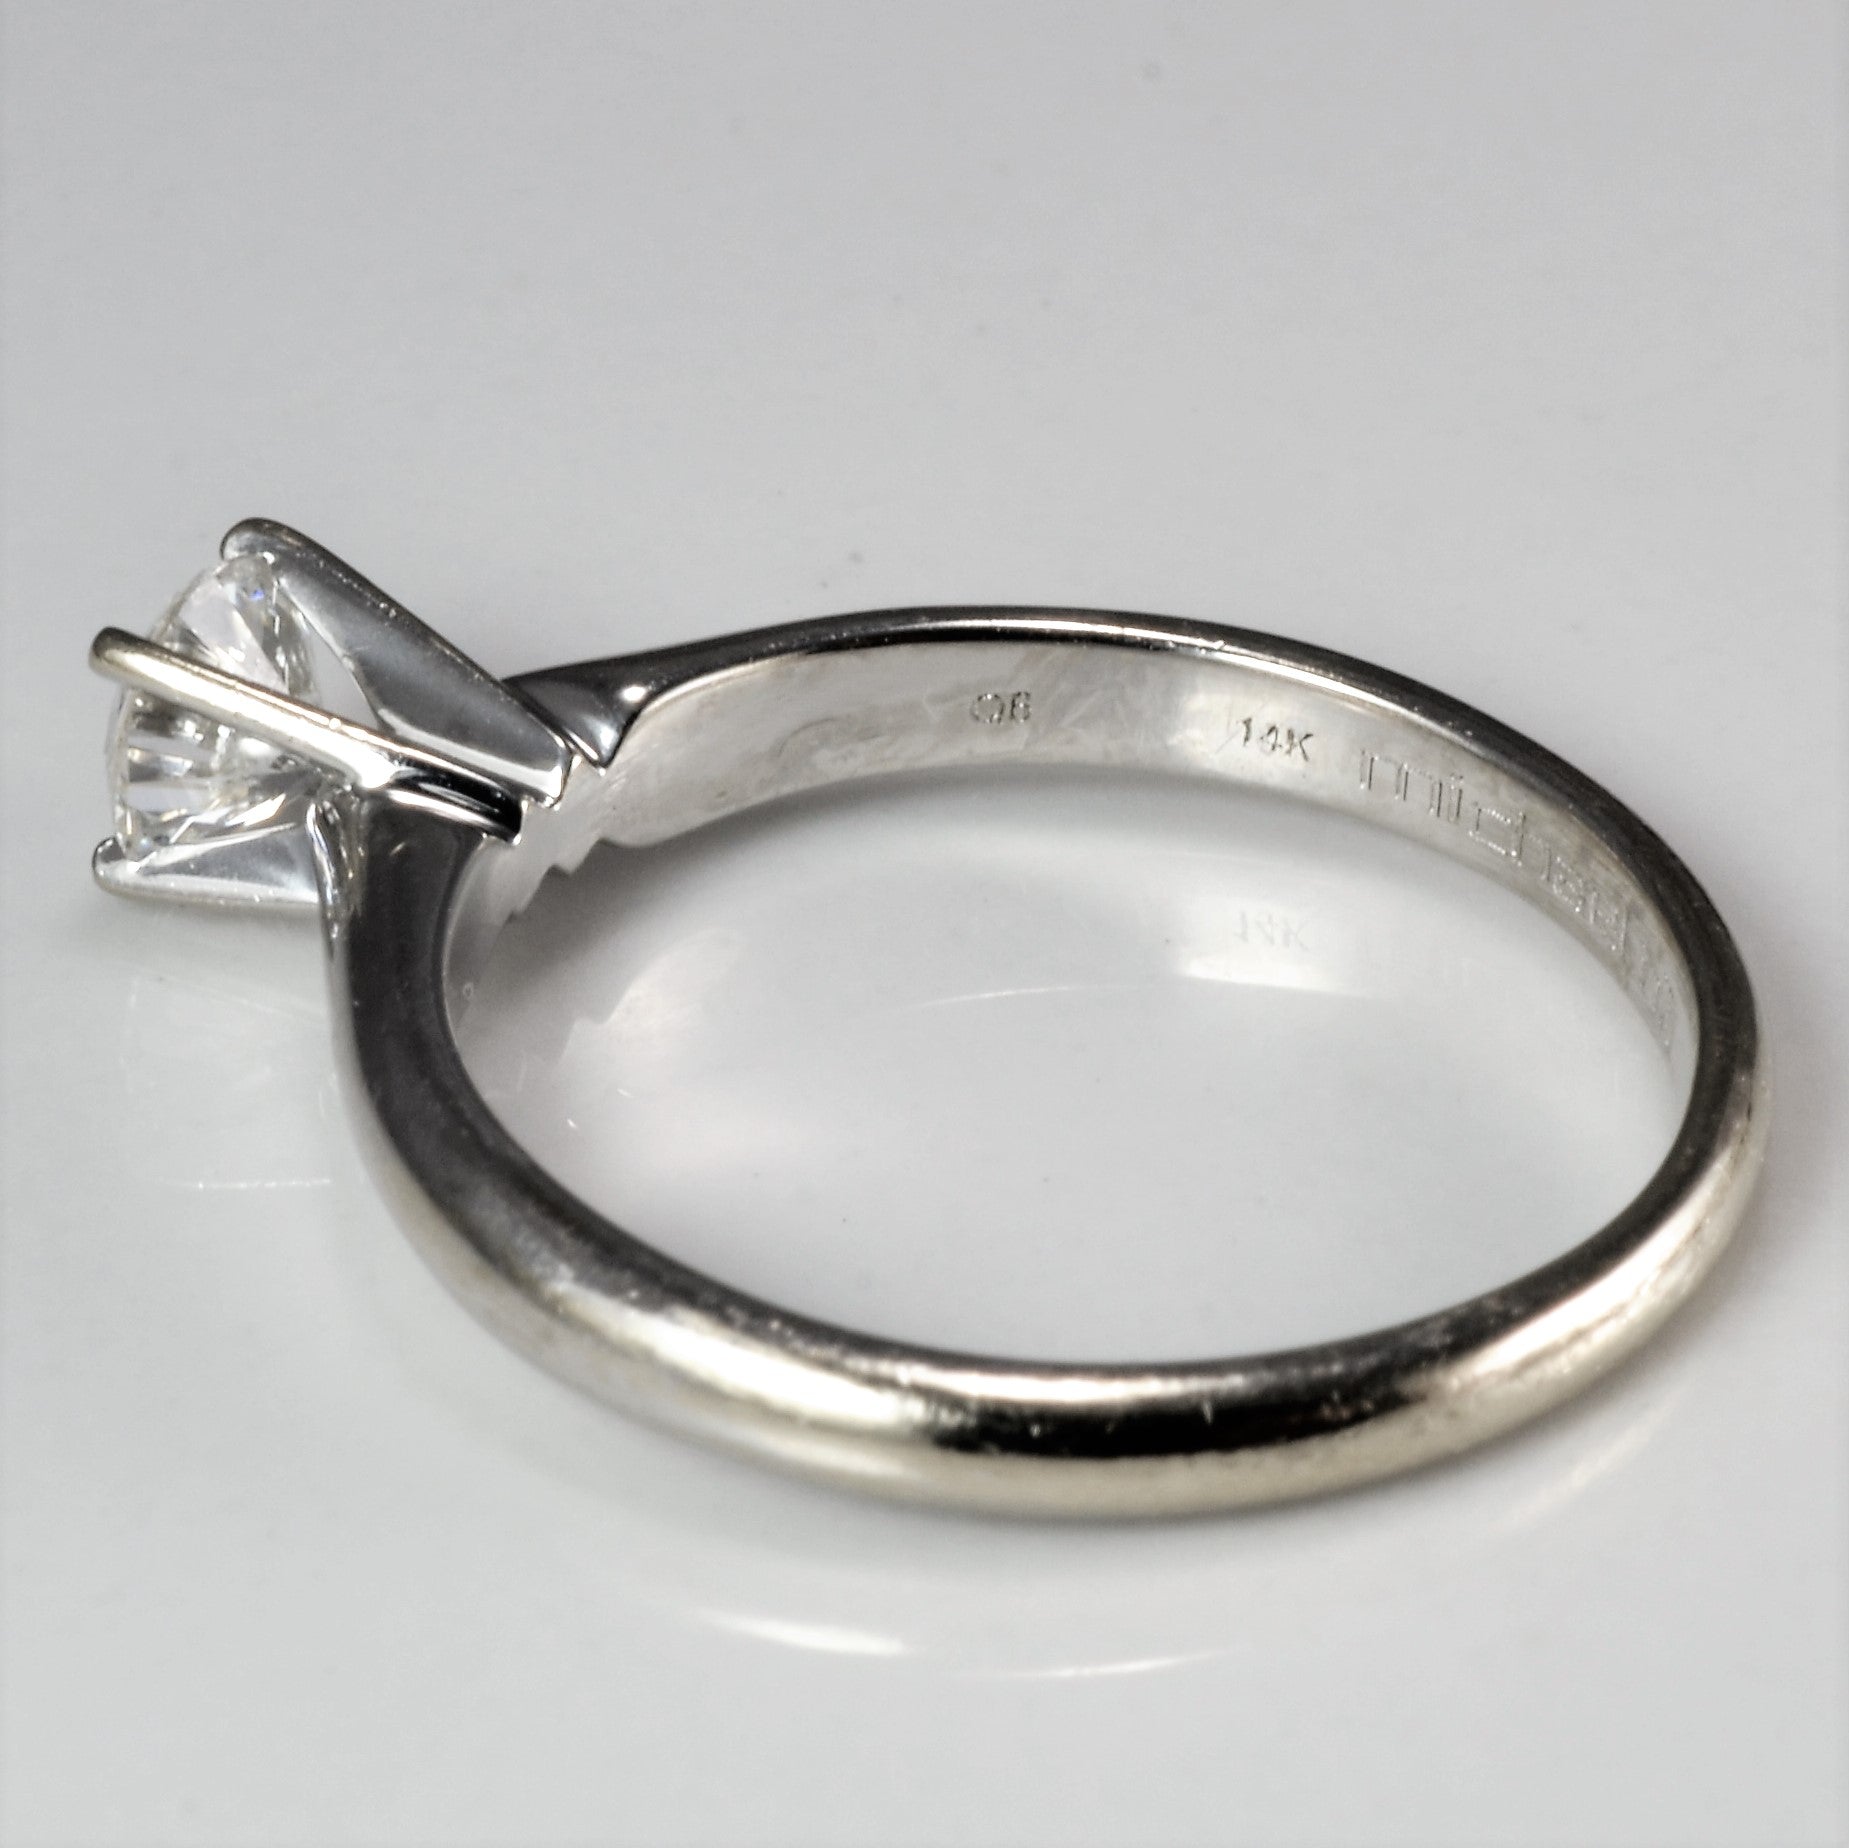 Solitaire Diamond Engagement Ring | 0.34 ct, SZ 5 |